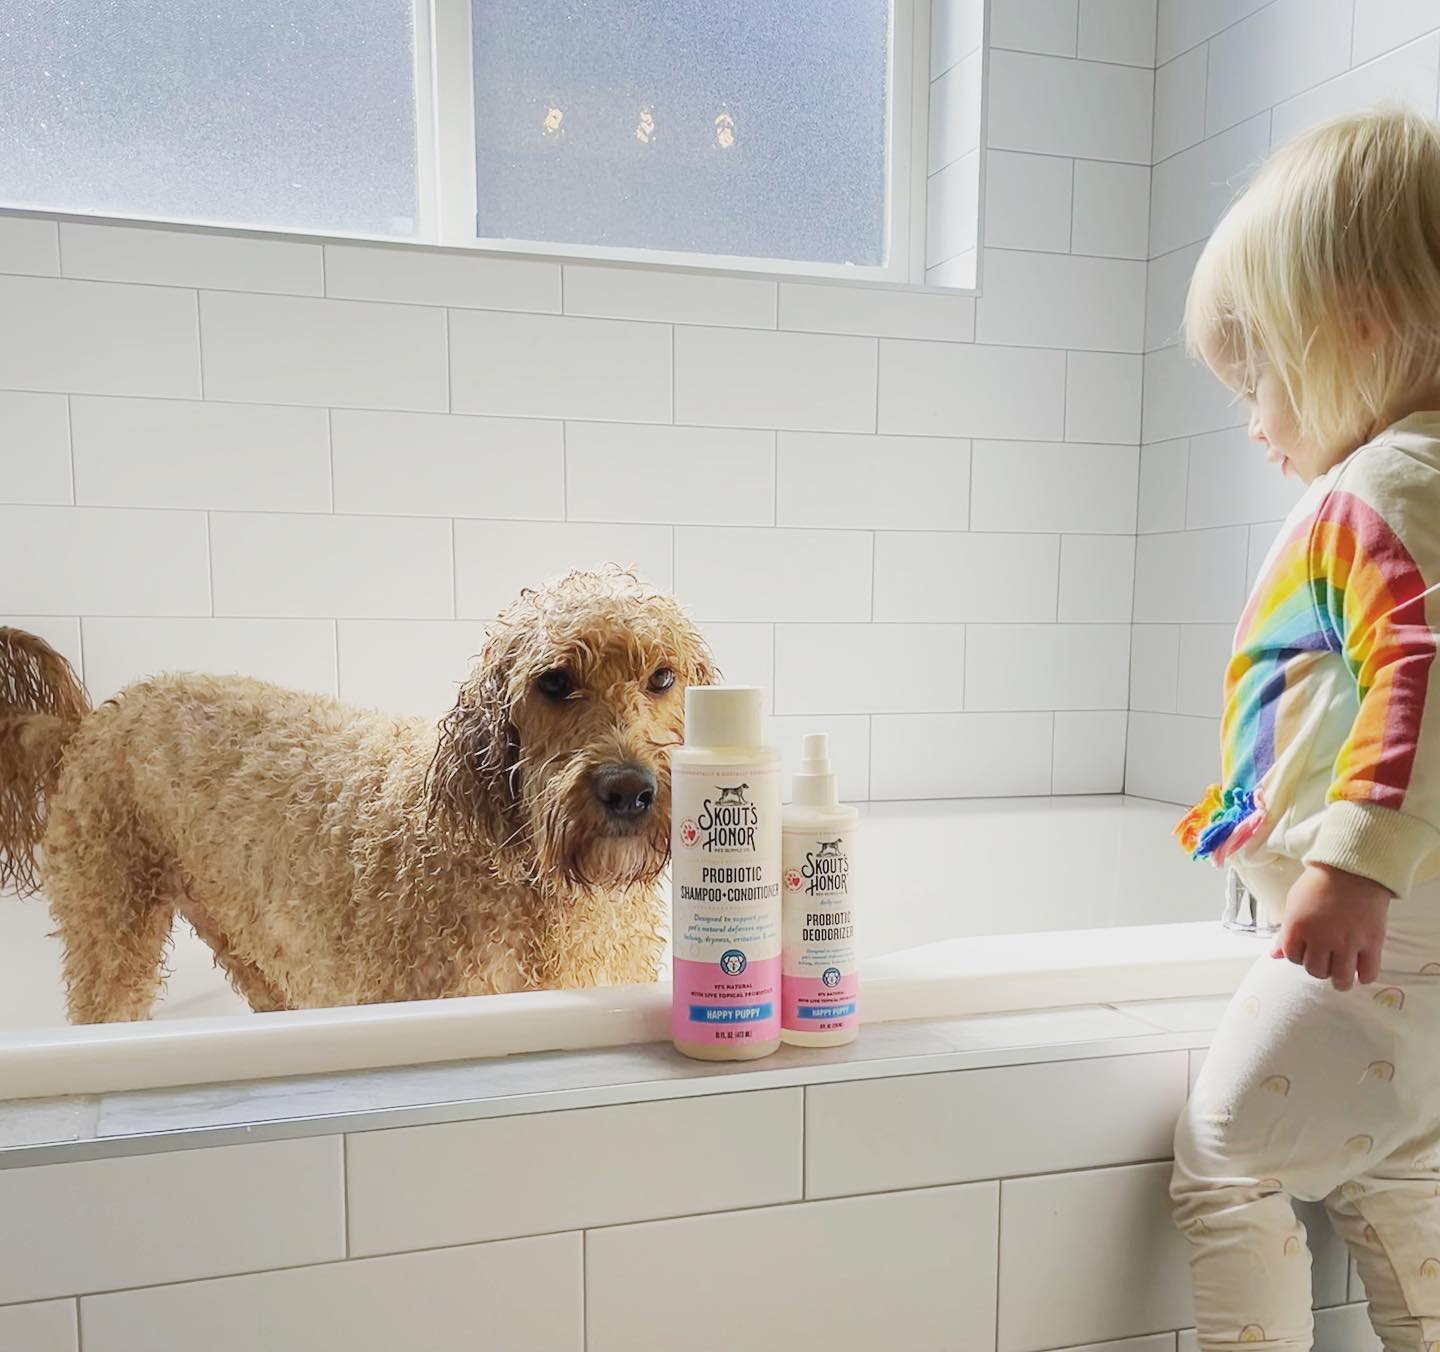 Skout's Honor Probiotic Shampoo+Conditioner Happy Puppy(Lilac & Linen) 16oz